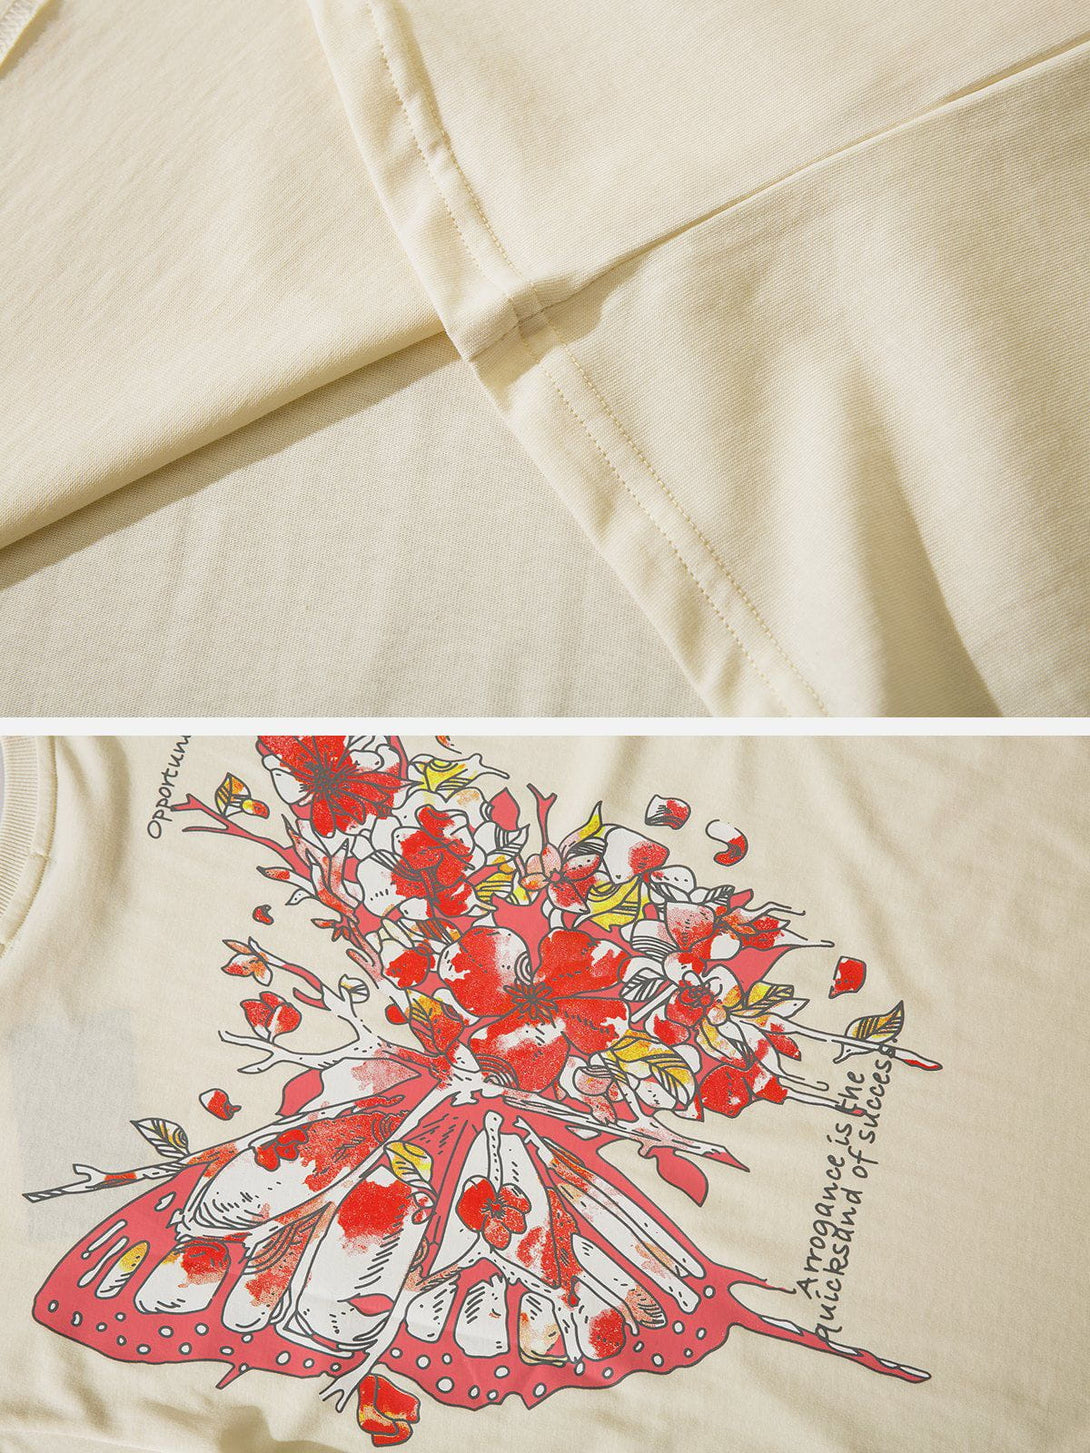 Majesda® - Butterfly Sakura Graphic Tee- Outfit Ideas - Streetwear Fashion - majesda.com